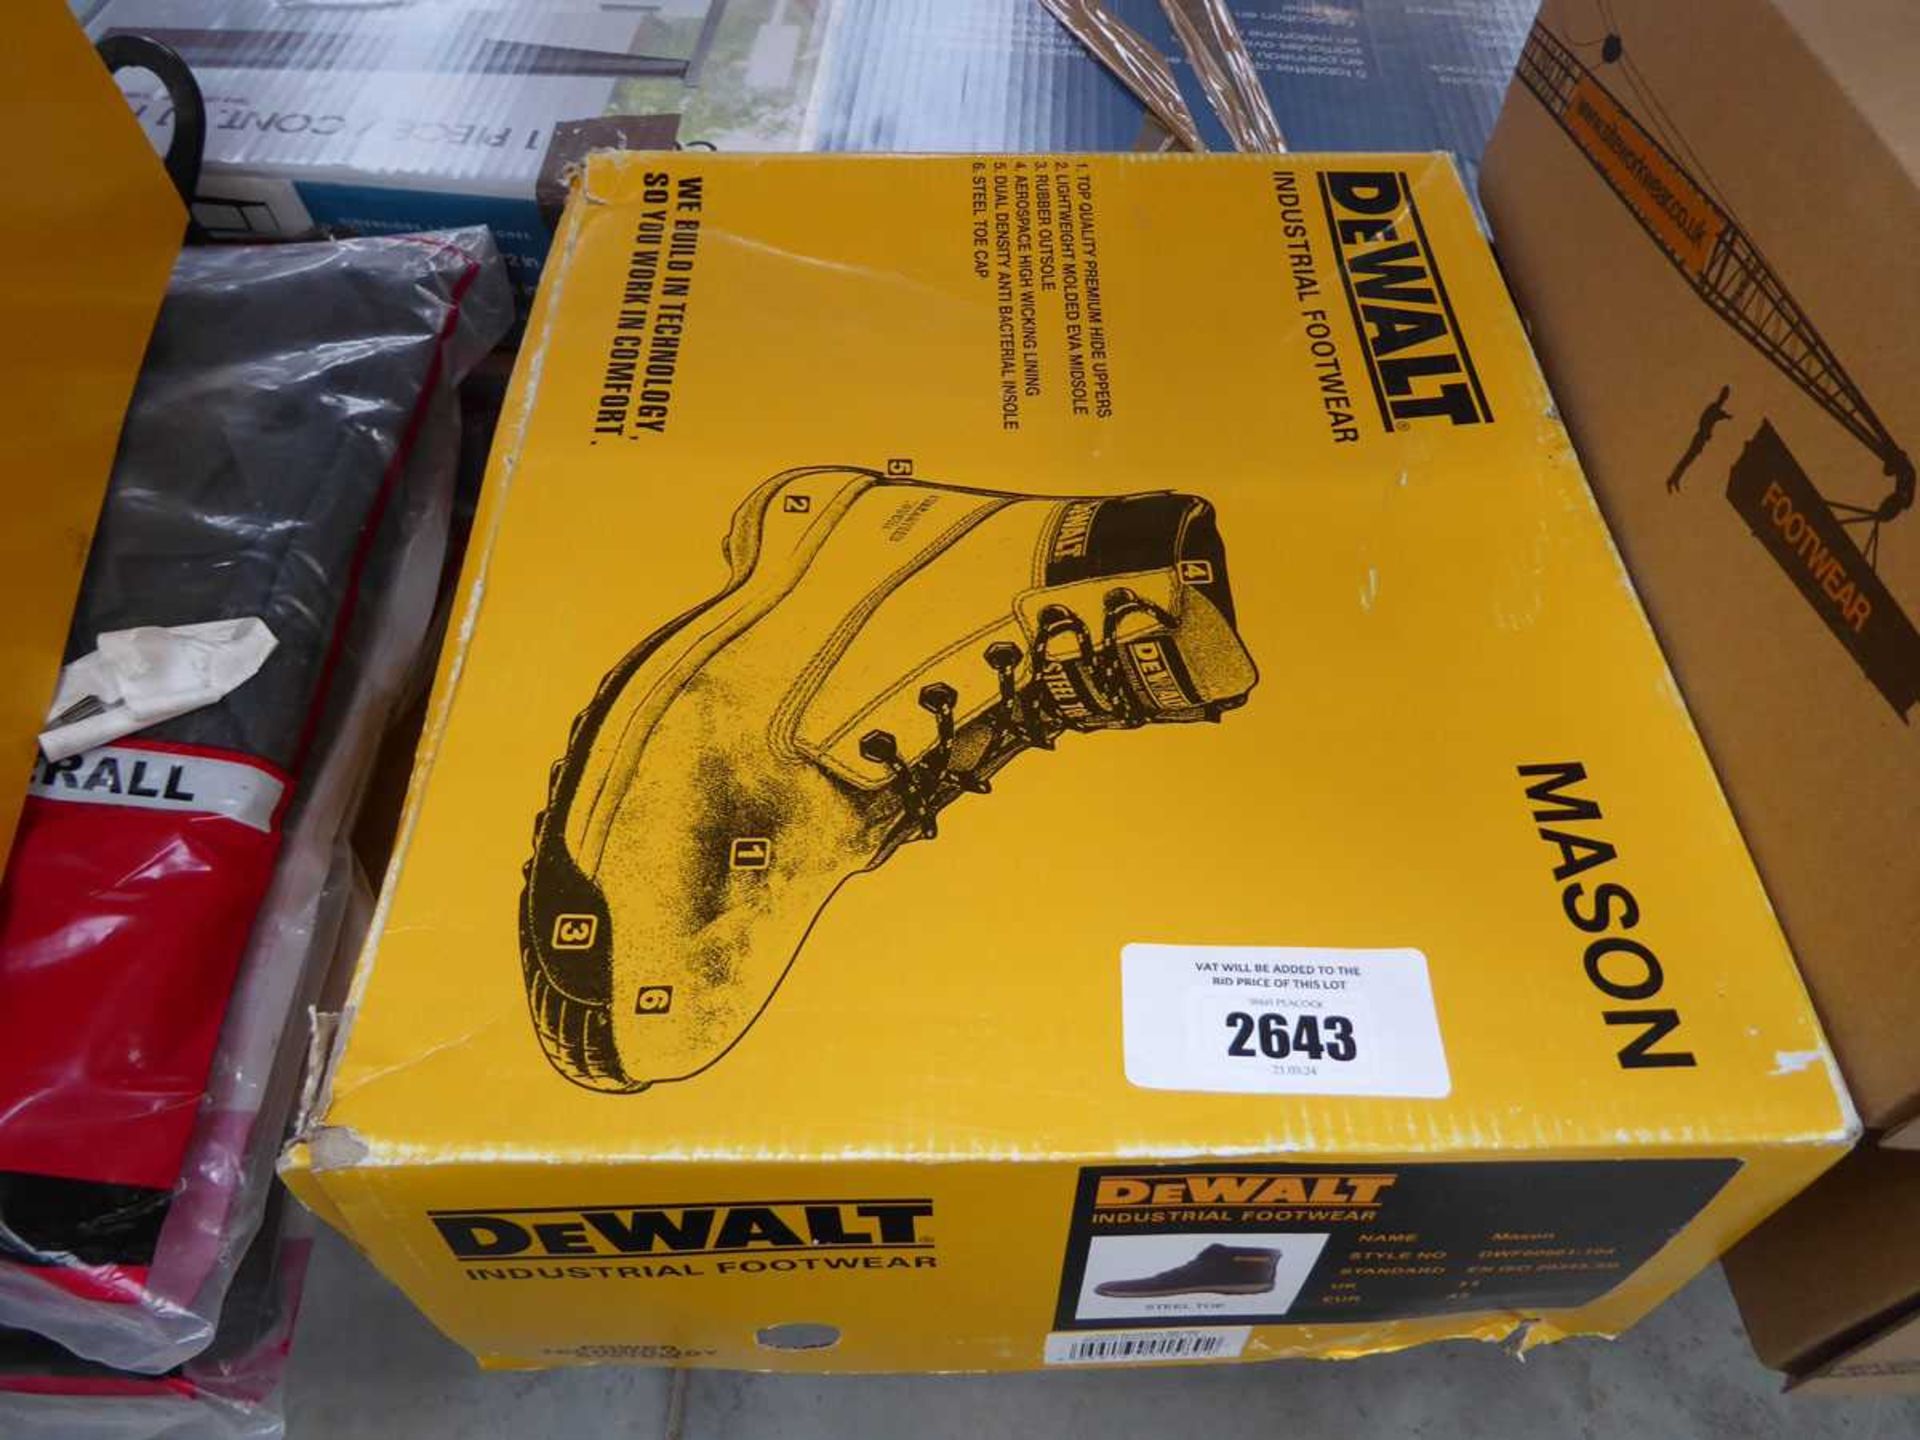 +VAT Boxed pair of DeWalt Mason steel toe boots in brown (size UK 11)